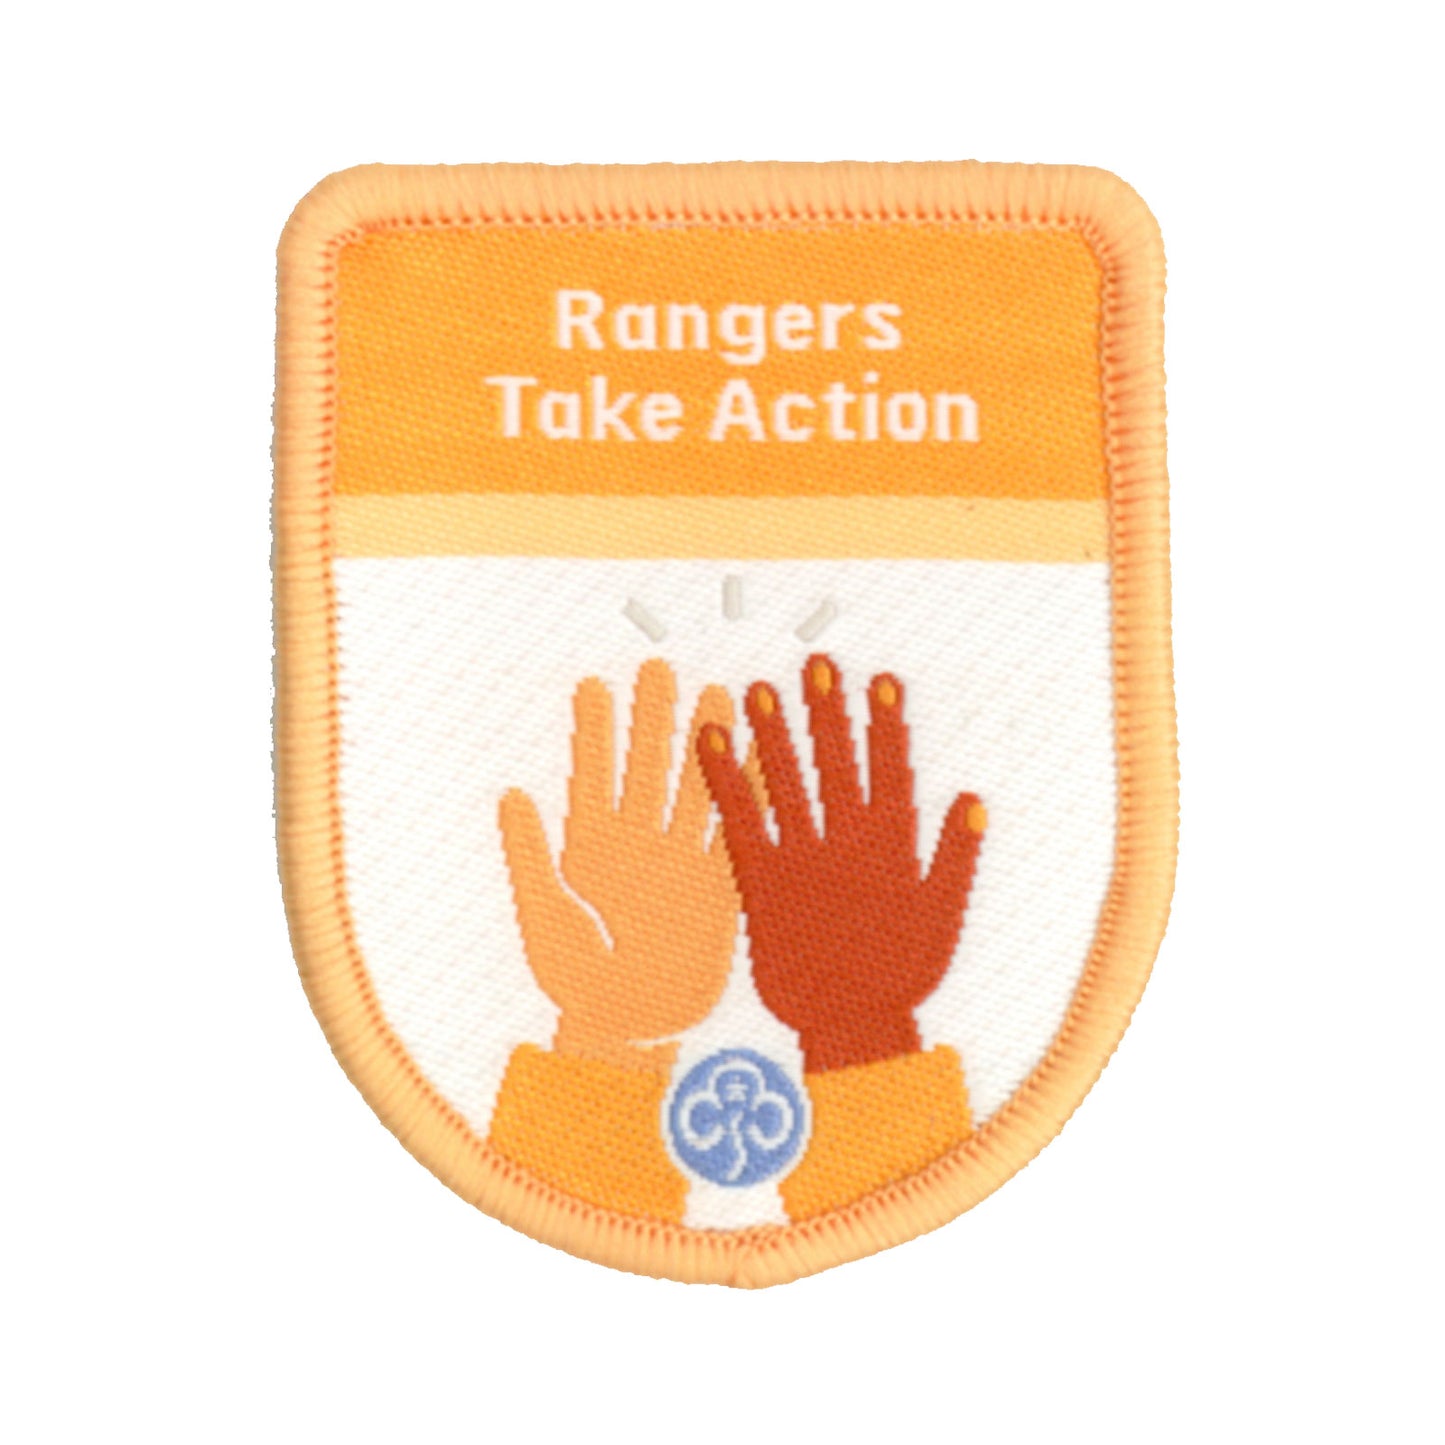 Rangers Take Action Theme Award Woven Badge